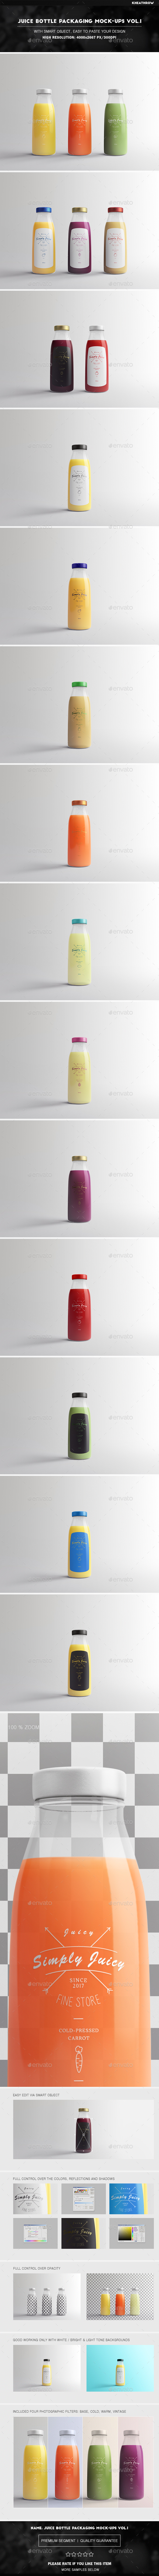 Juice Bottle Packaging Mock-Ups Vol.1